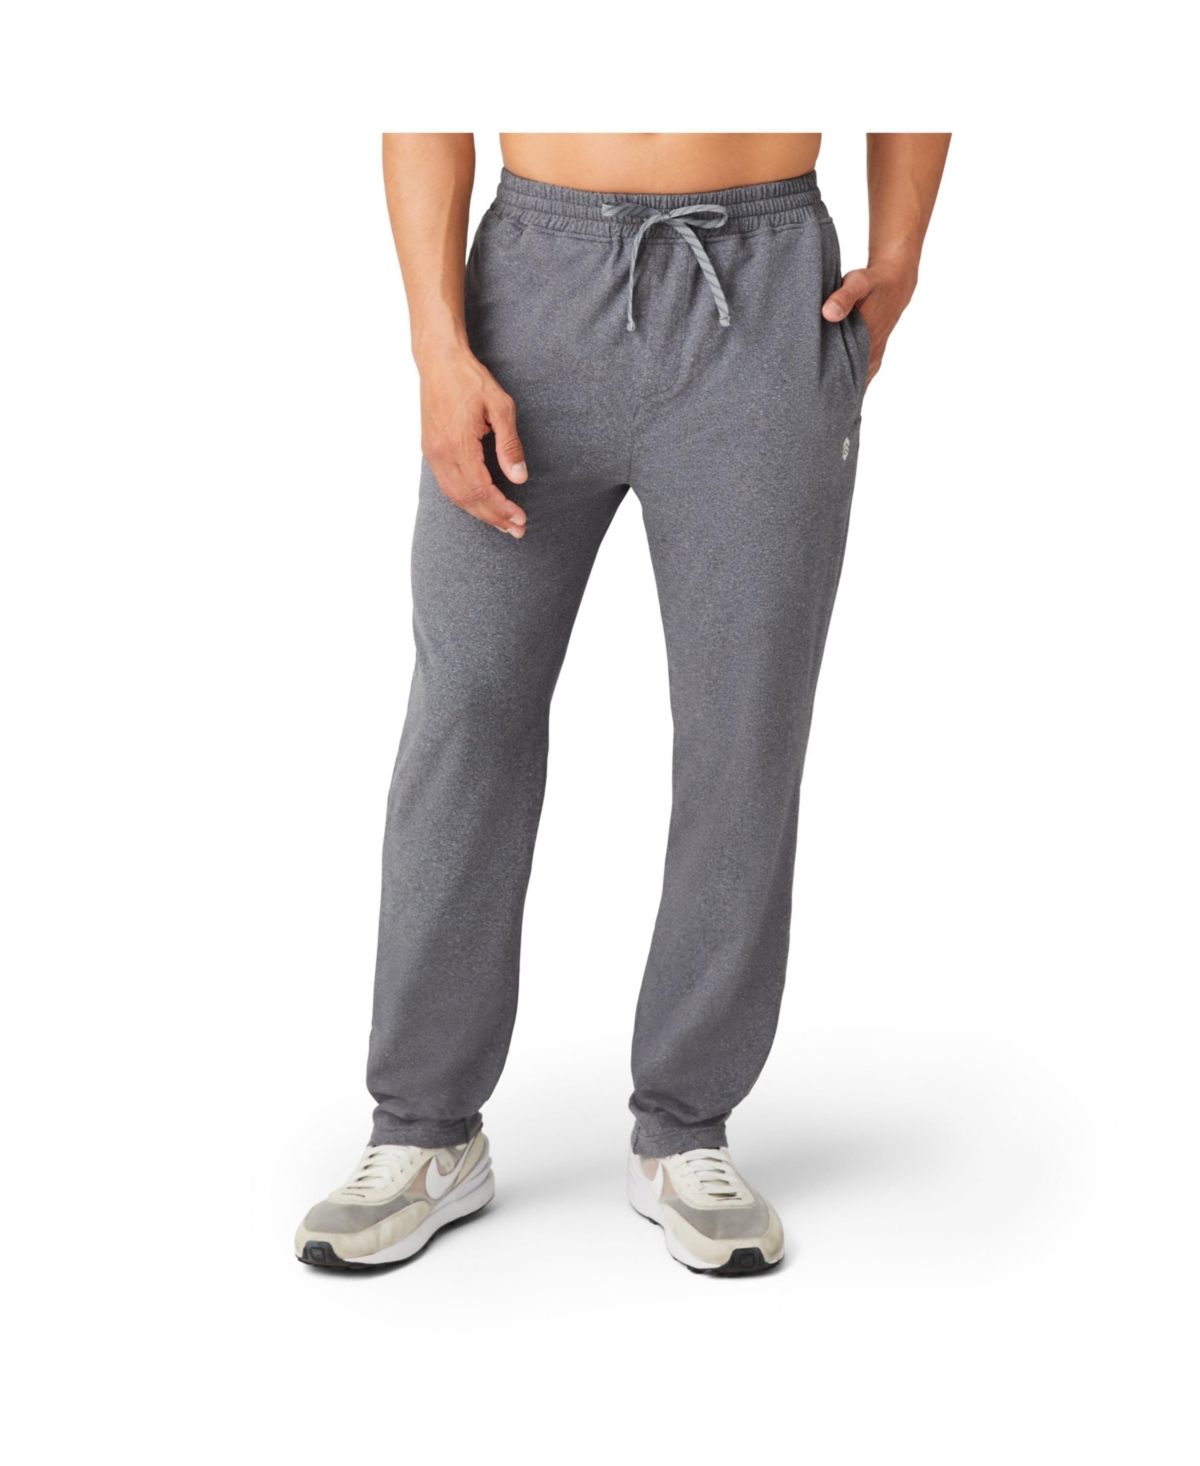 Men's Sueded Spacedye Sweatpant - Medium grey